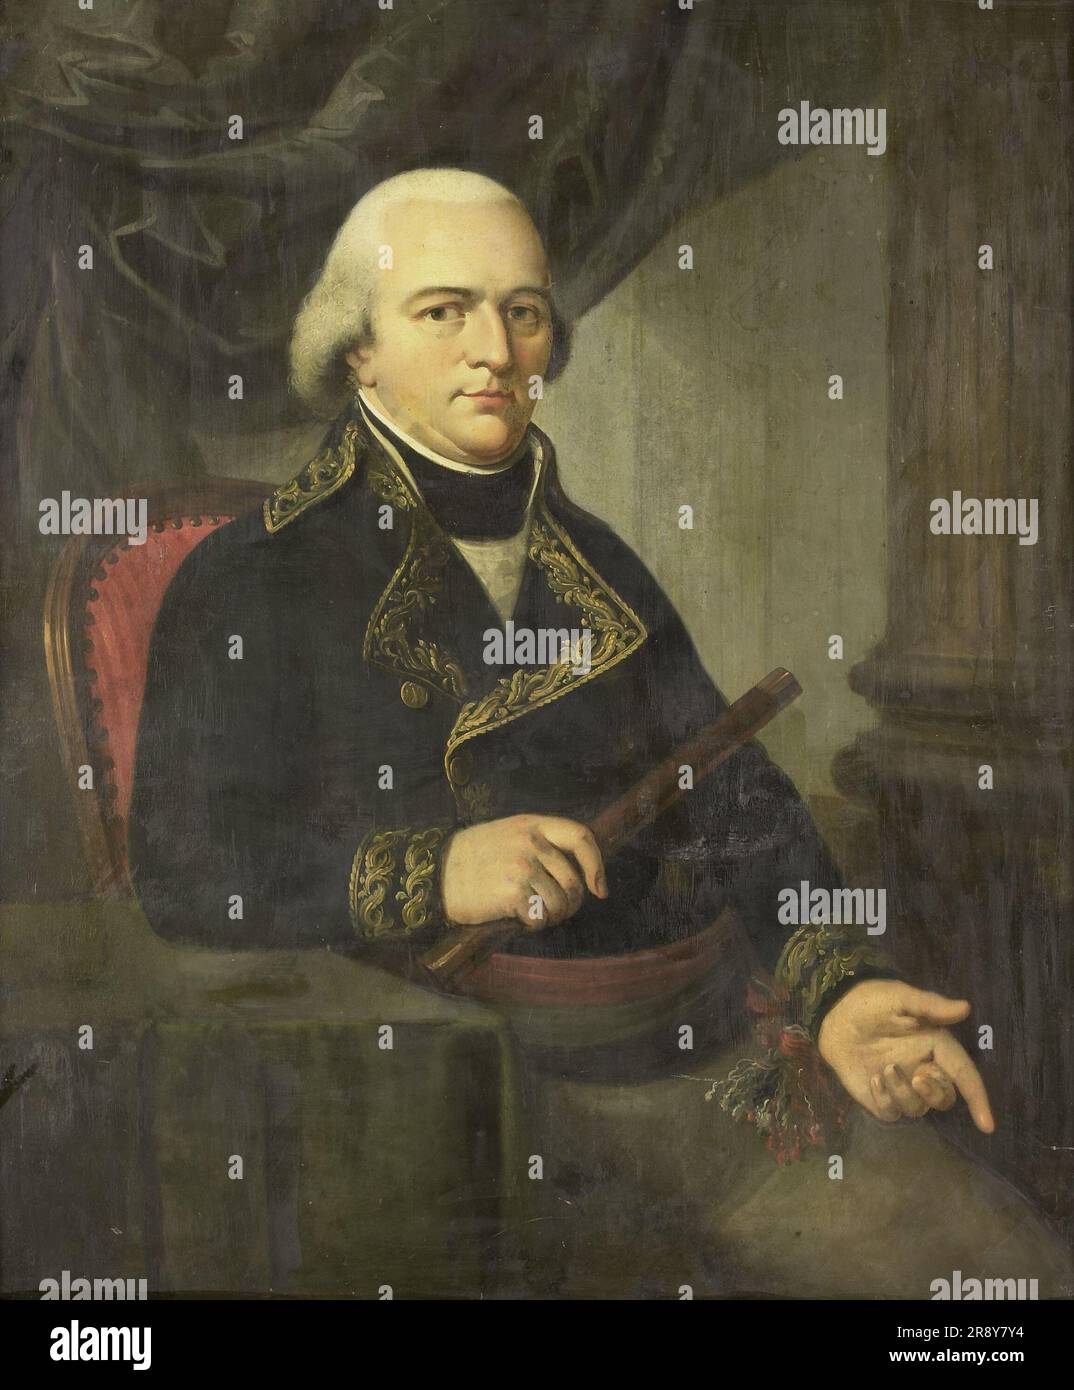 Ritratto di Pieter Gerardus van Overstraten, Governatore generale delle Indie Orientali olandesi, 1802-1820. Attribuito ad Adriaan de Lelie. Foto Stock